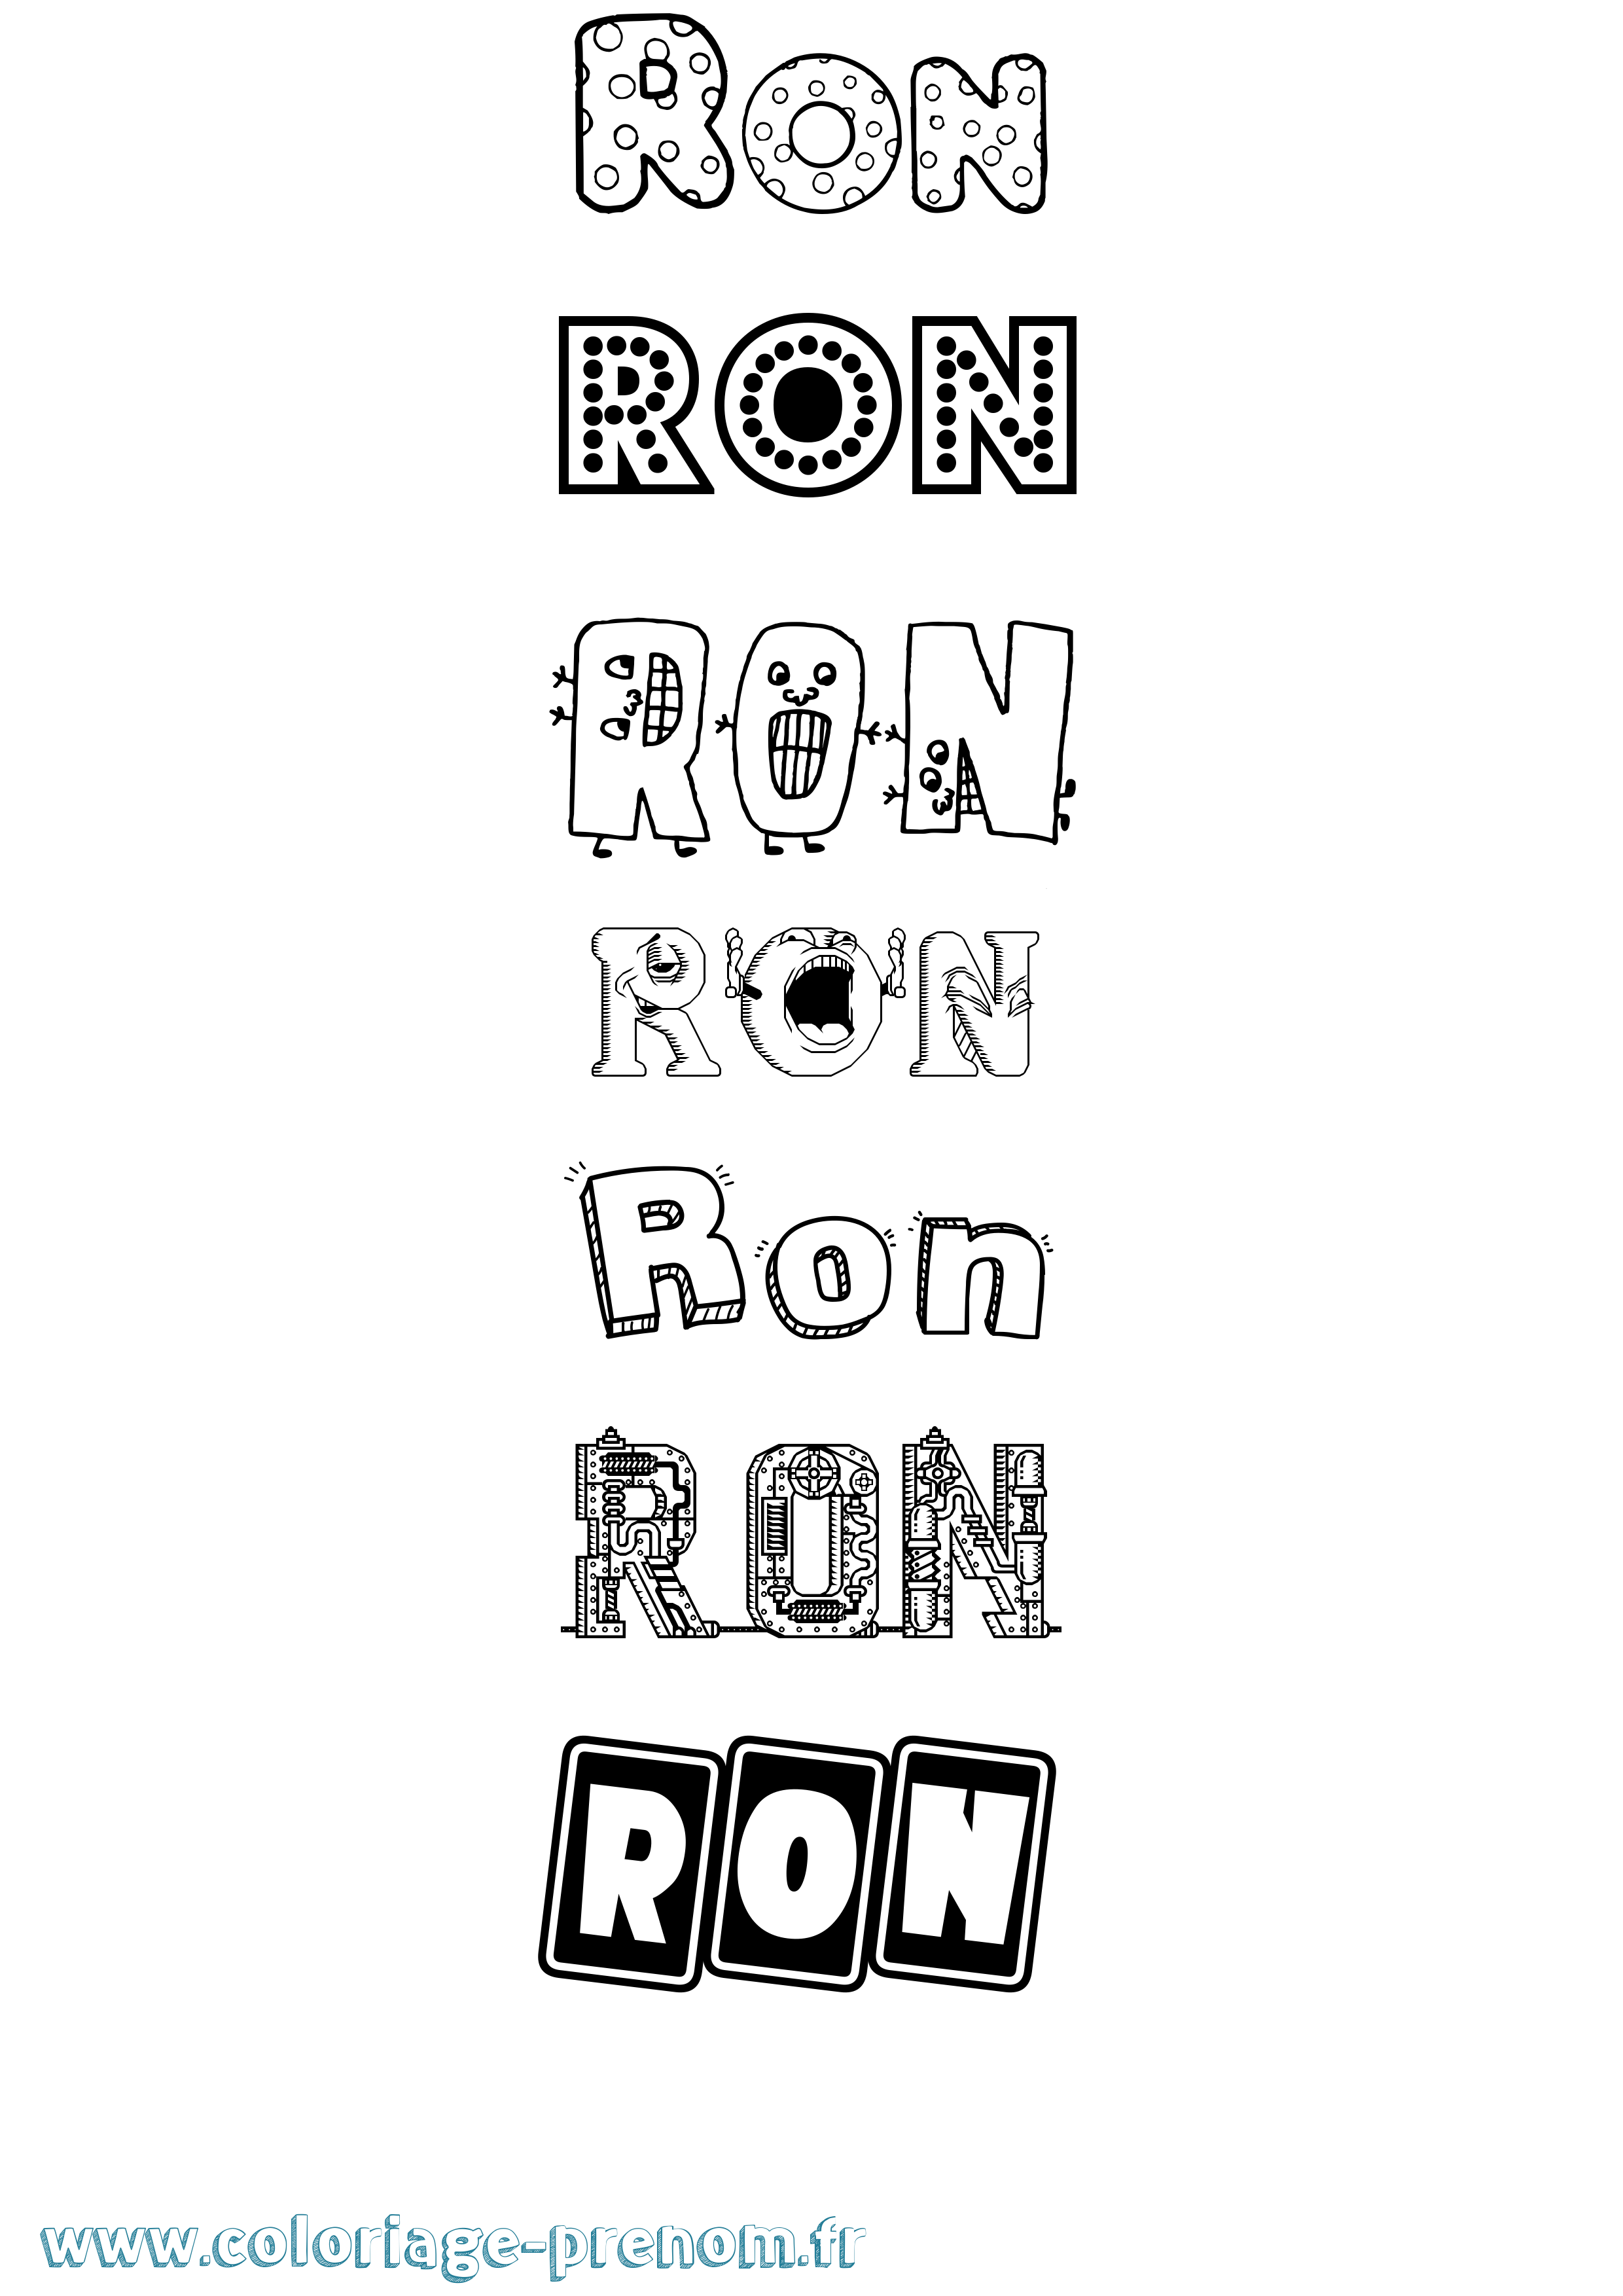 Coloriage prénom Ron Fun